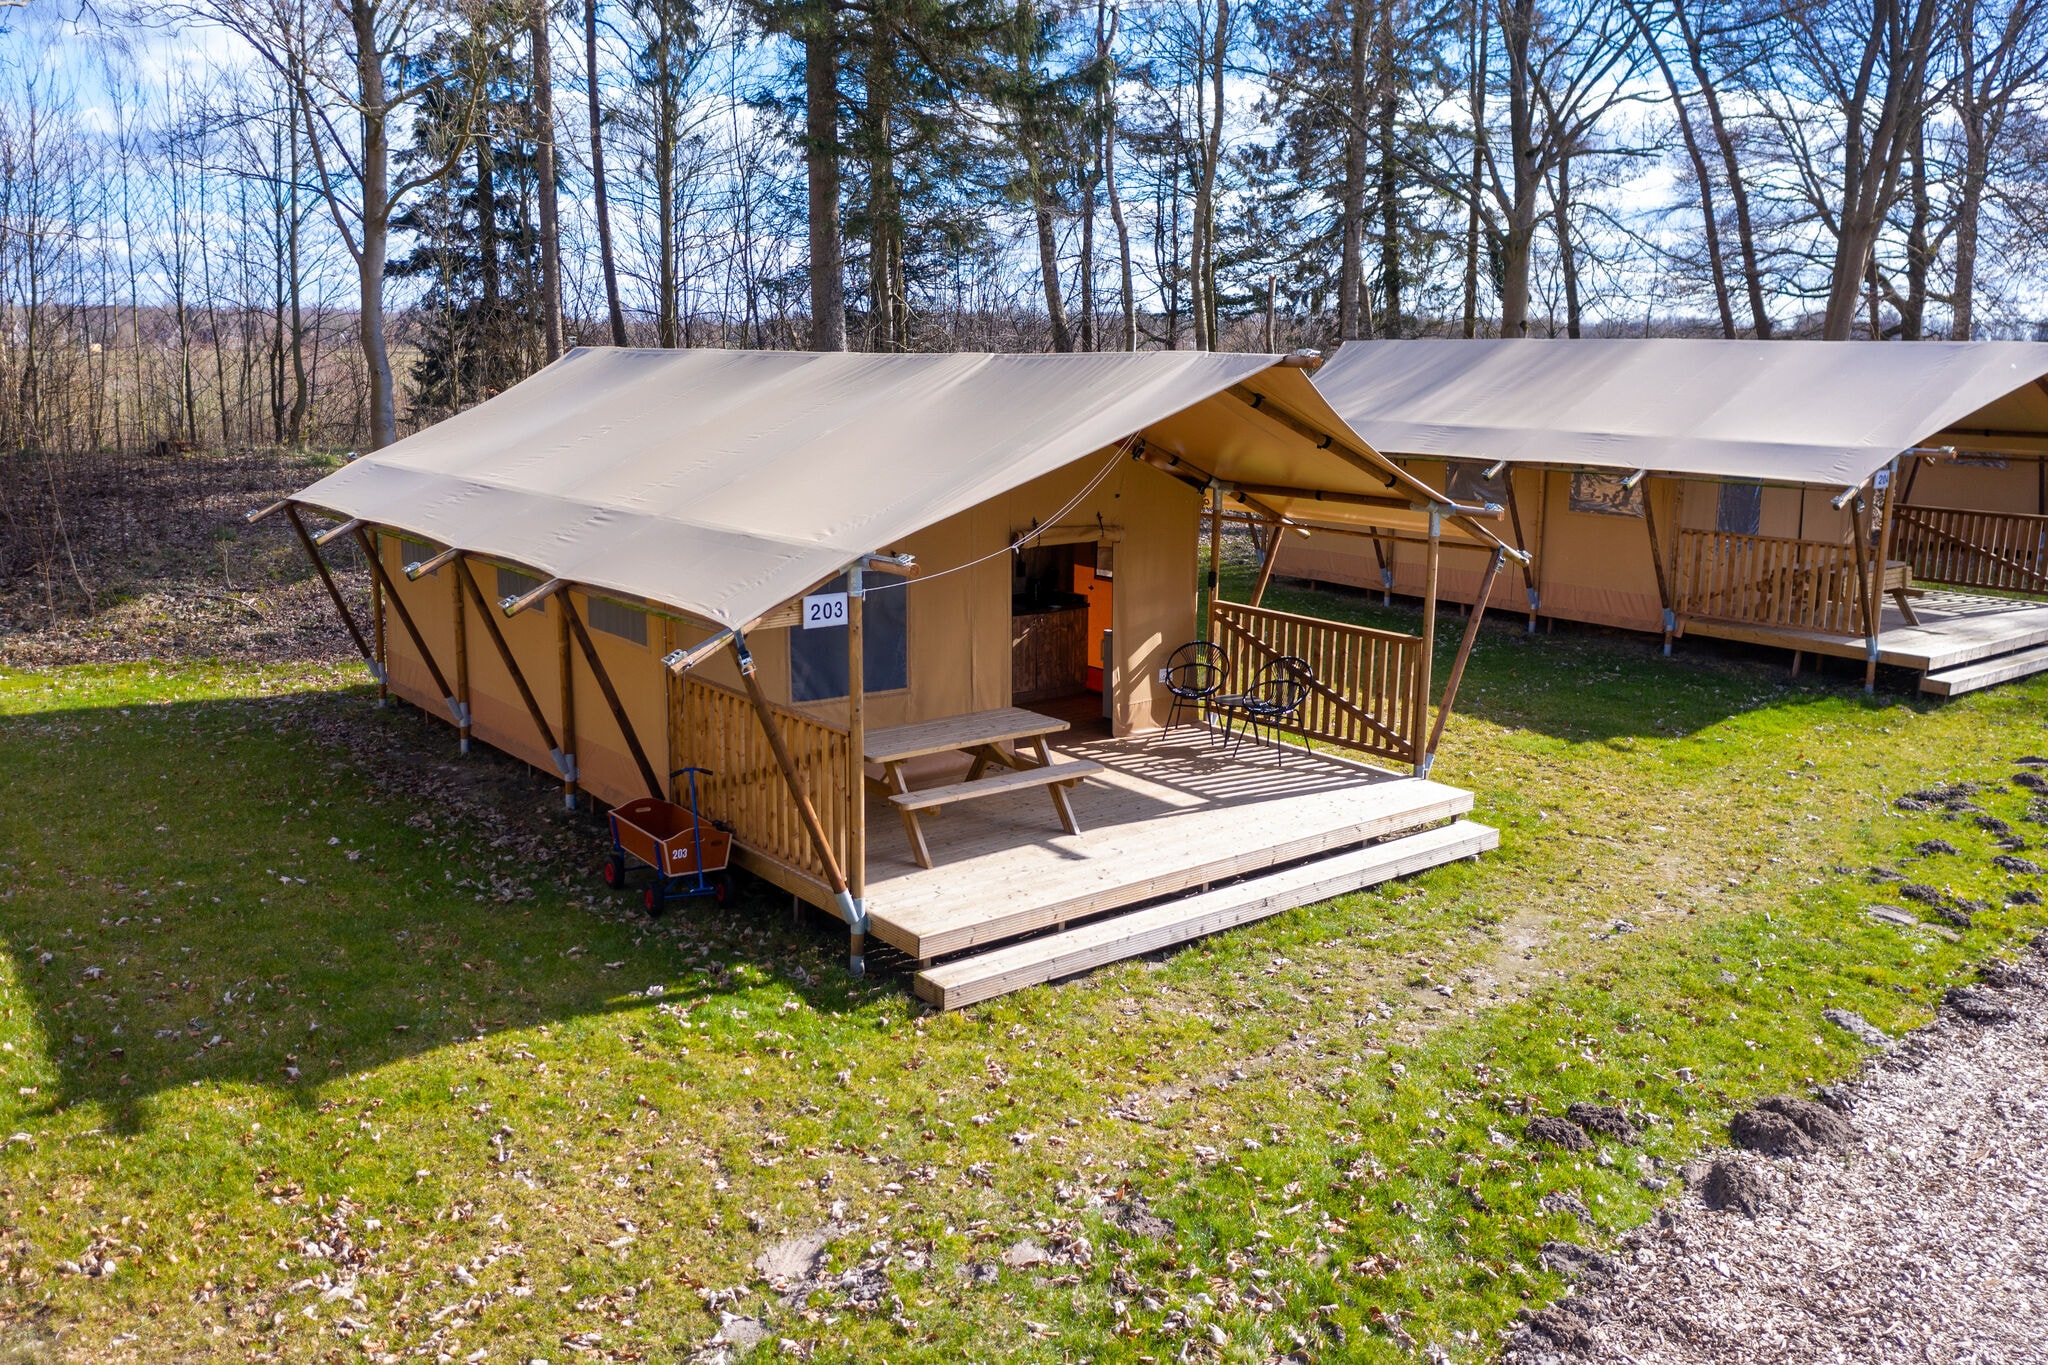 Nice safari tent with kitchen, at a recreational lake